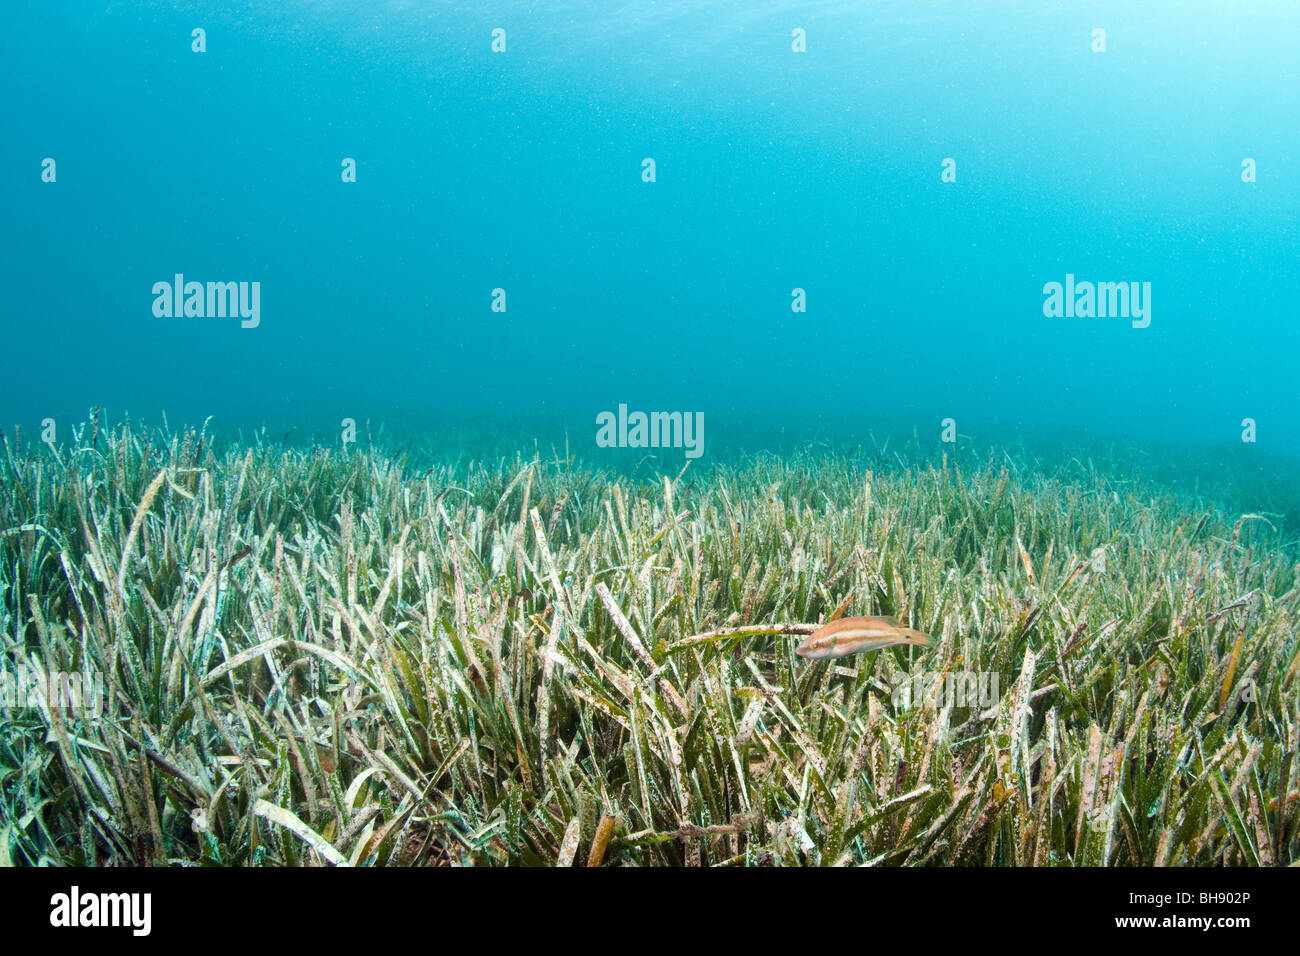 Seaweed Aera, Tamariu, Costa Brava, Mediterranean Sea, Spain Stock Photo